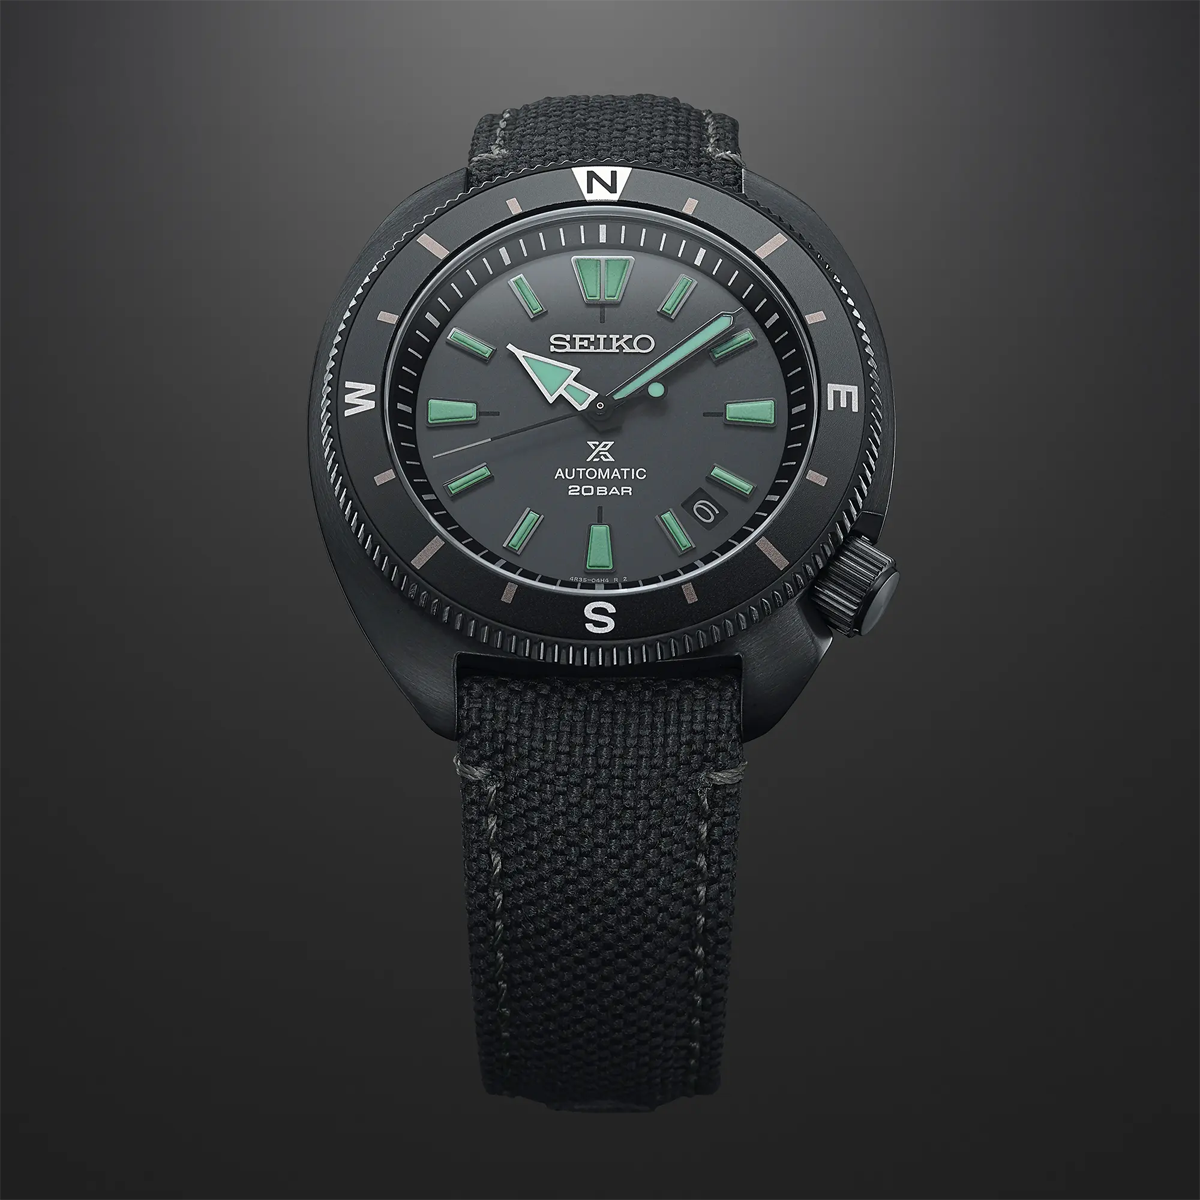 Prospex 'Black Series’ Tortoise Automatic, Black Bezel with Black Polyester Strap - SRPH99K1